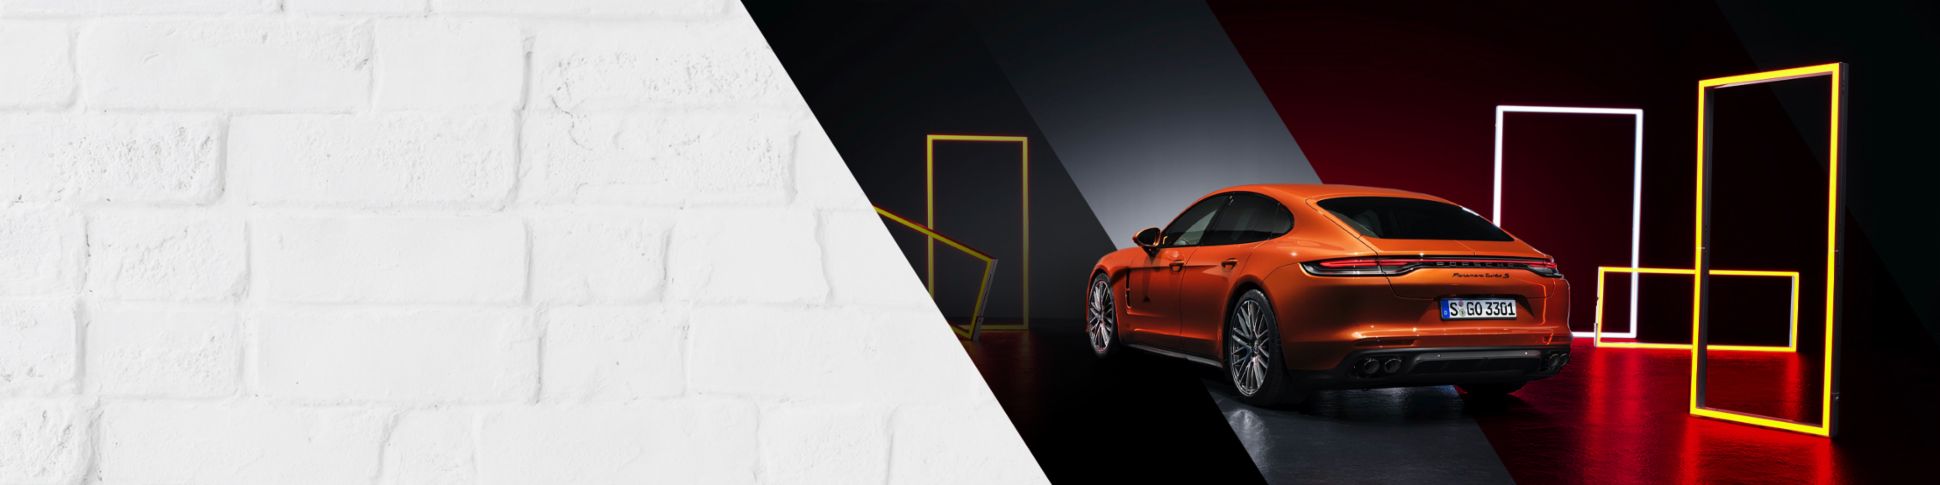 Digitaler, luxuriöser, effizienter: Der neue Panamera - Porsche Newsroom DEU